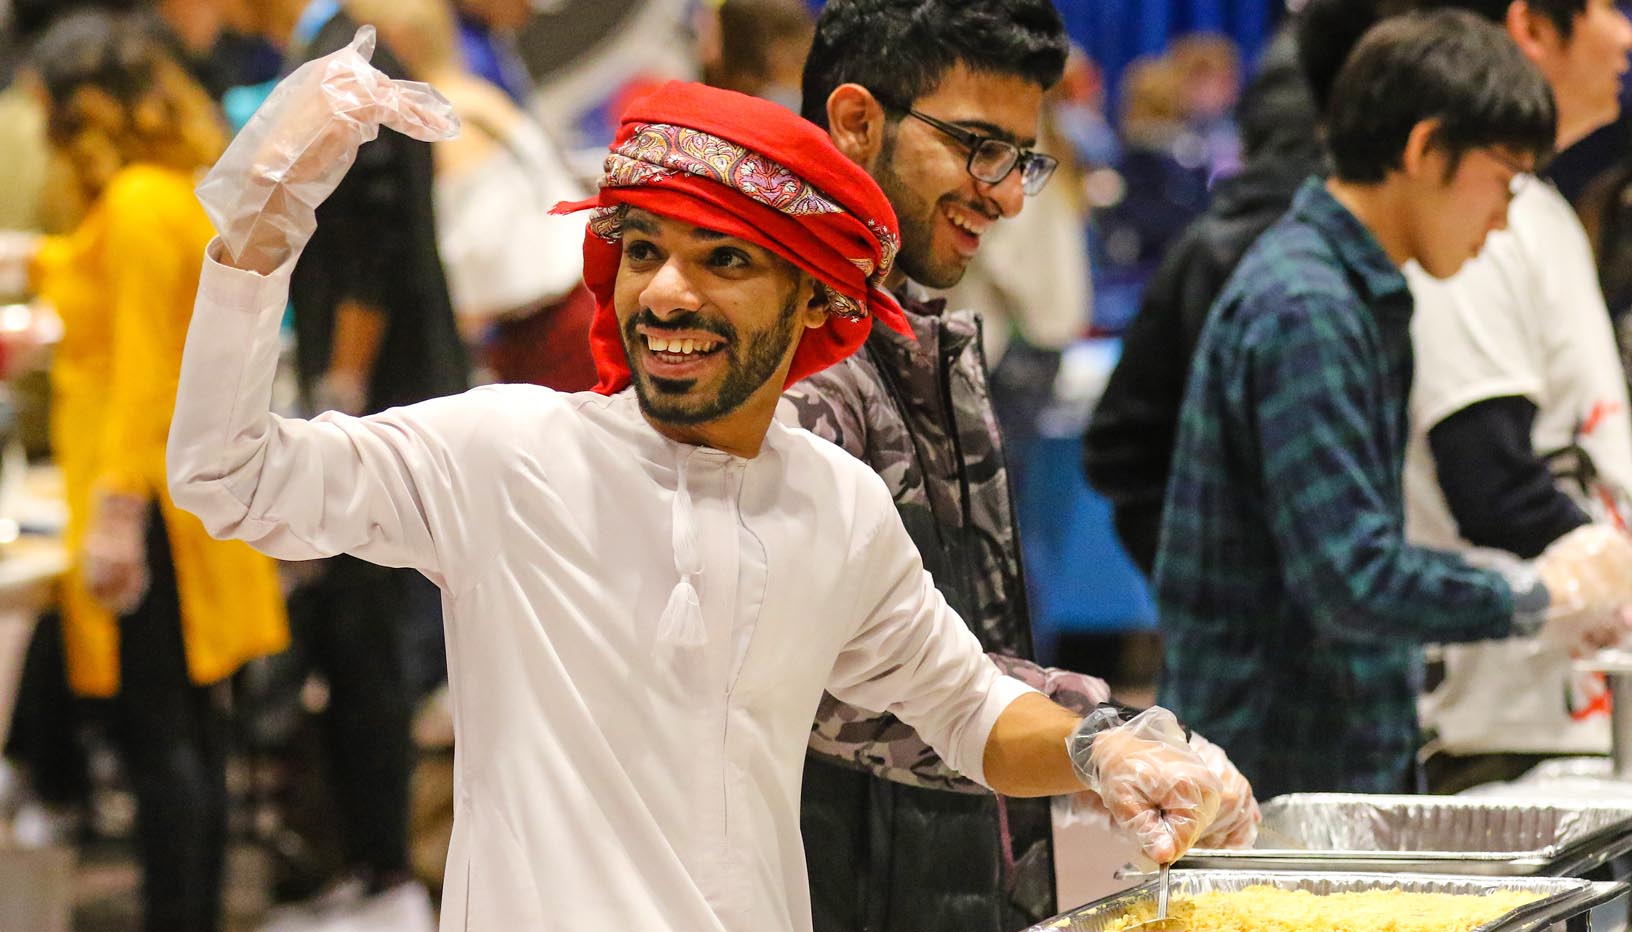 Khalid Alrasbi of Oman serves food at UNK's International Food and Cultural Festival. (Photo by Todd Gottula, UNK Communications)